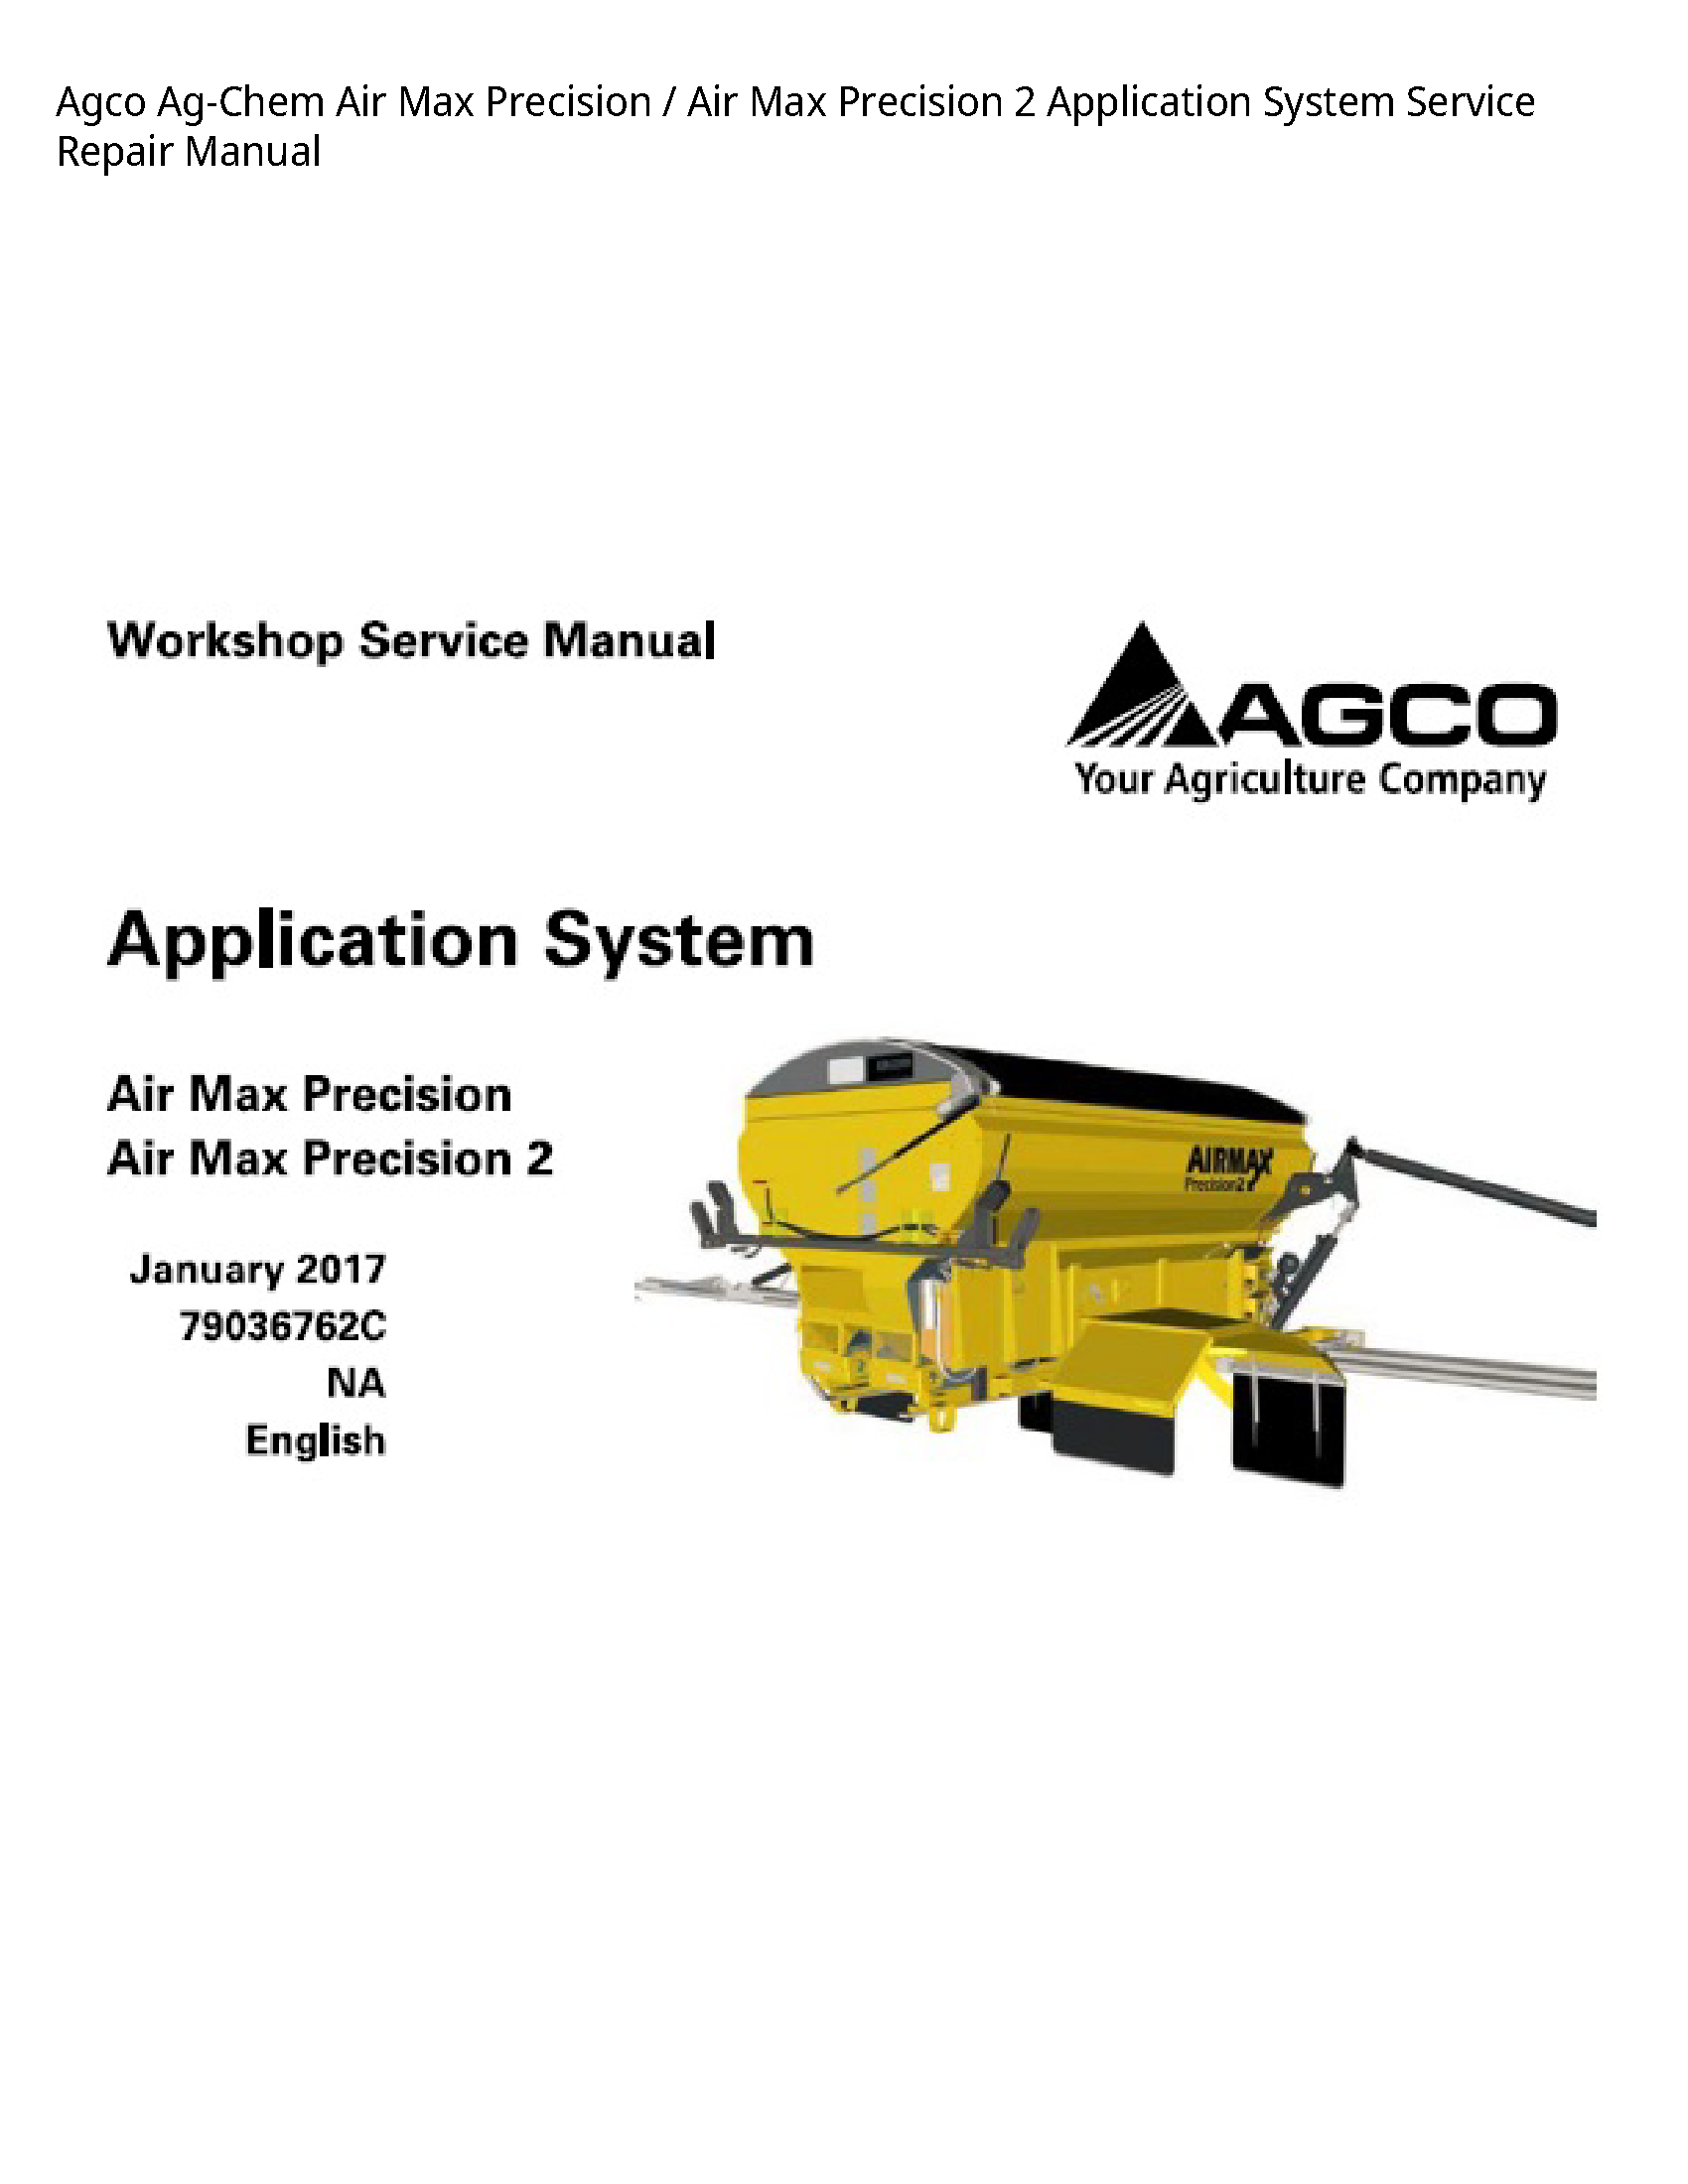 AGCO 2 Ag-Chem Air Max Precision Air Max Precision Application System manual